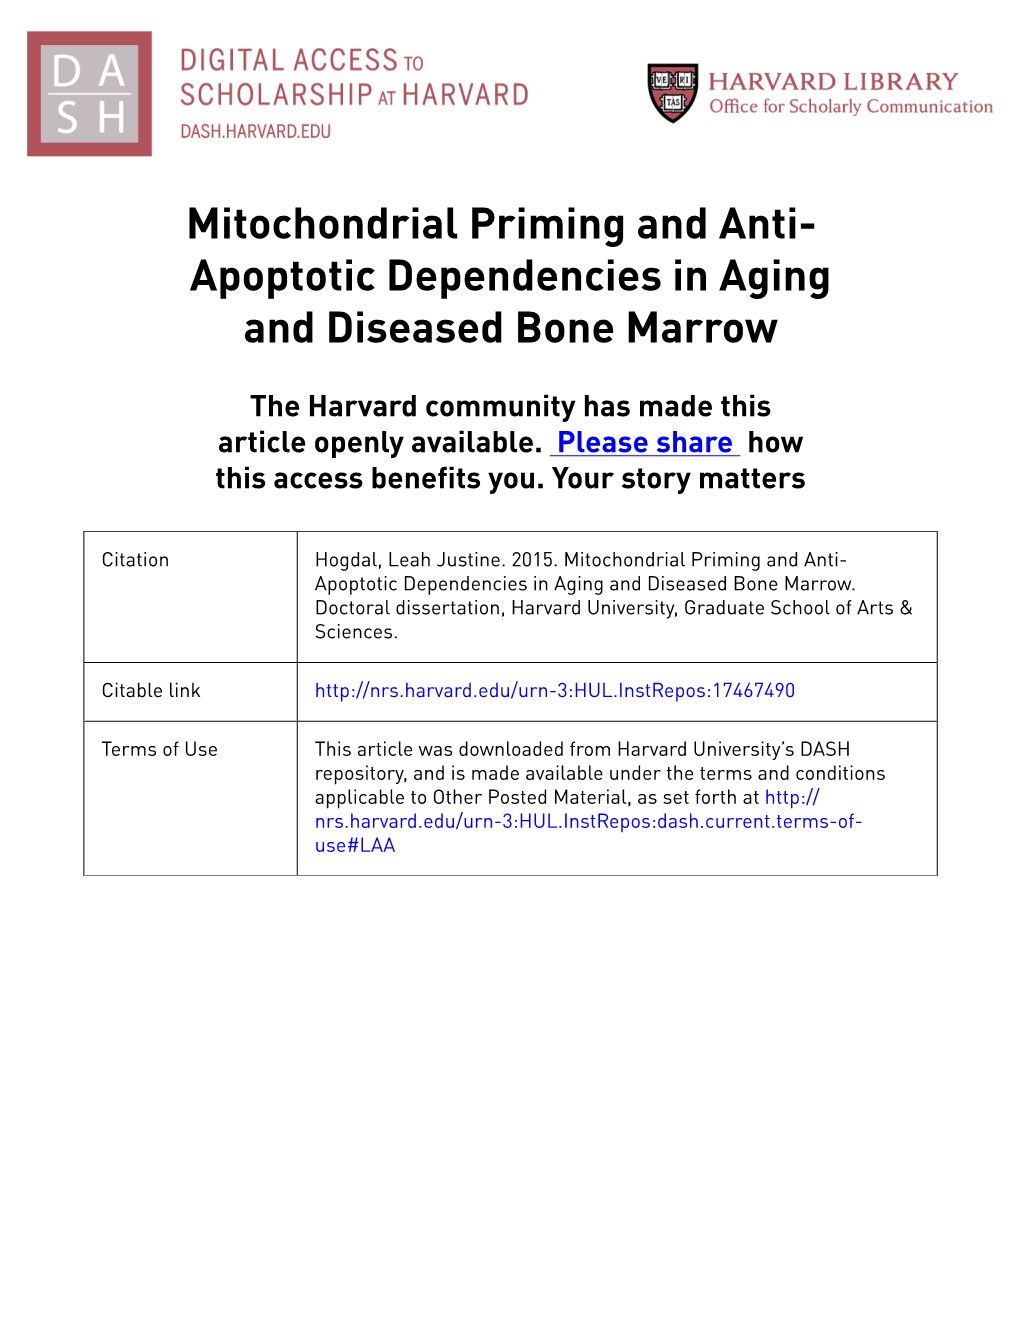 Mitochondrial Priming and Anti- Apoptotic Dependencies in Aging and Diseased Bone Marrow